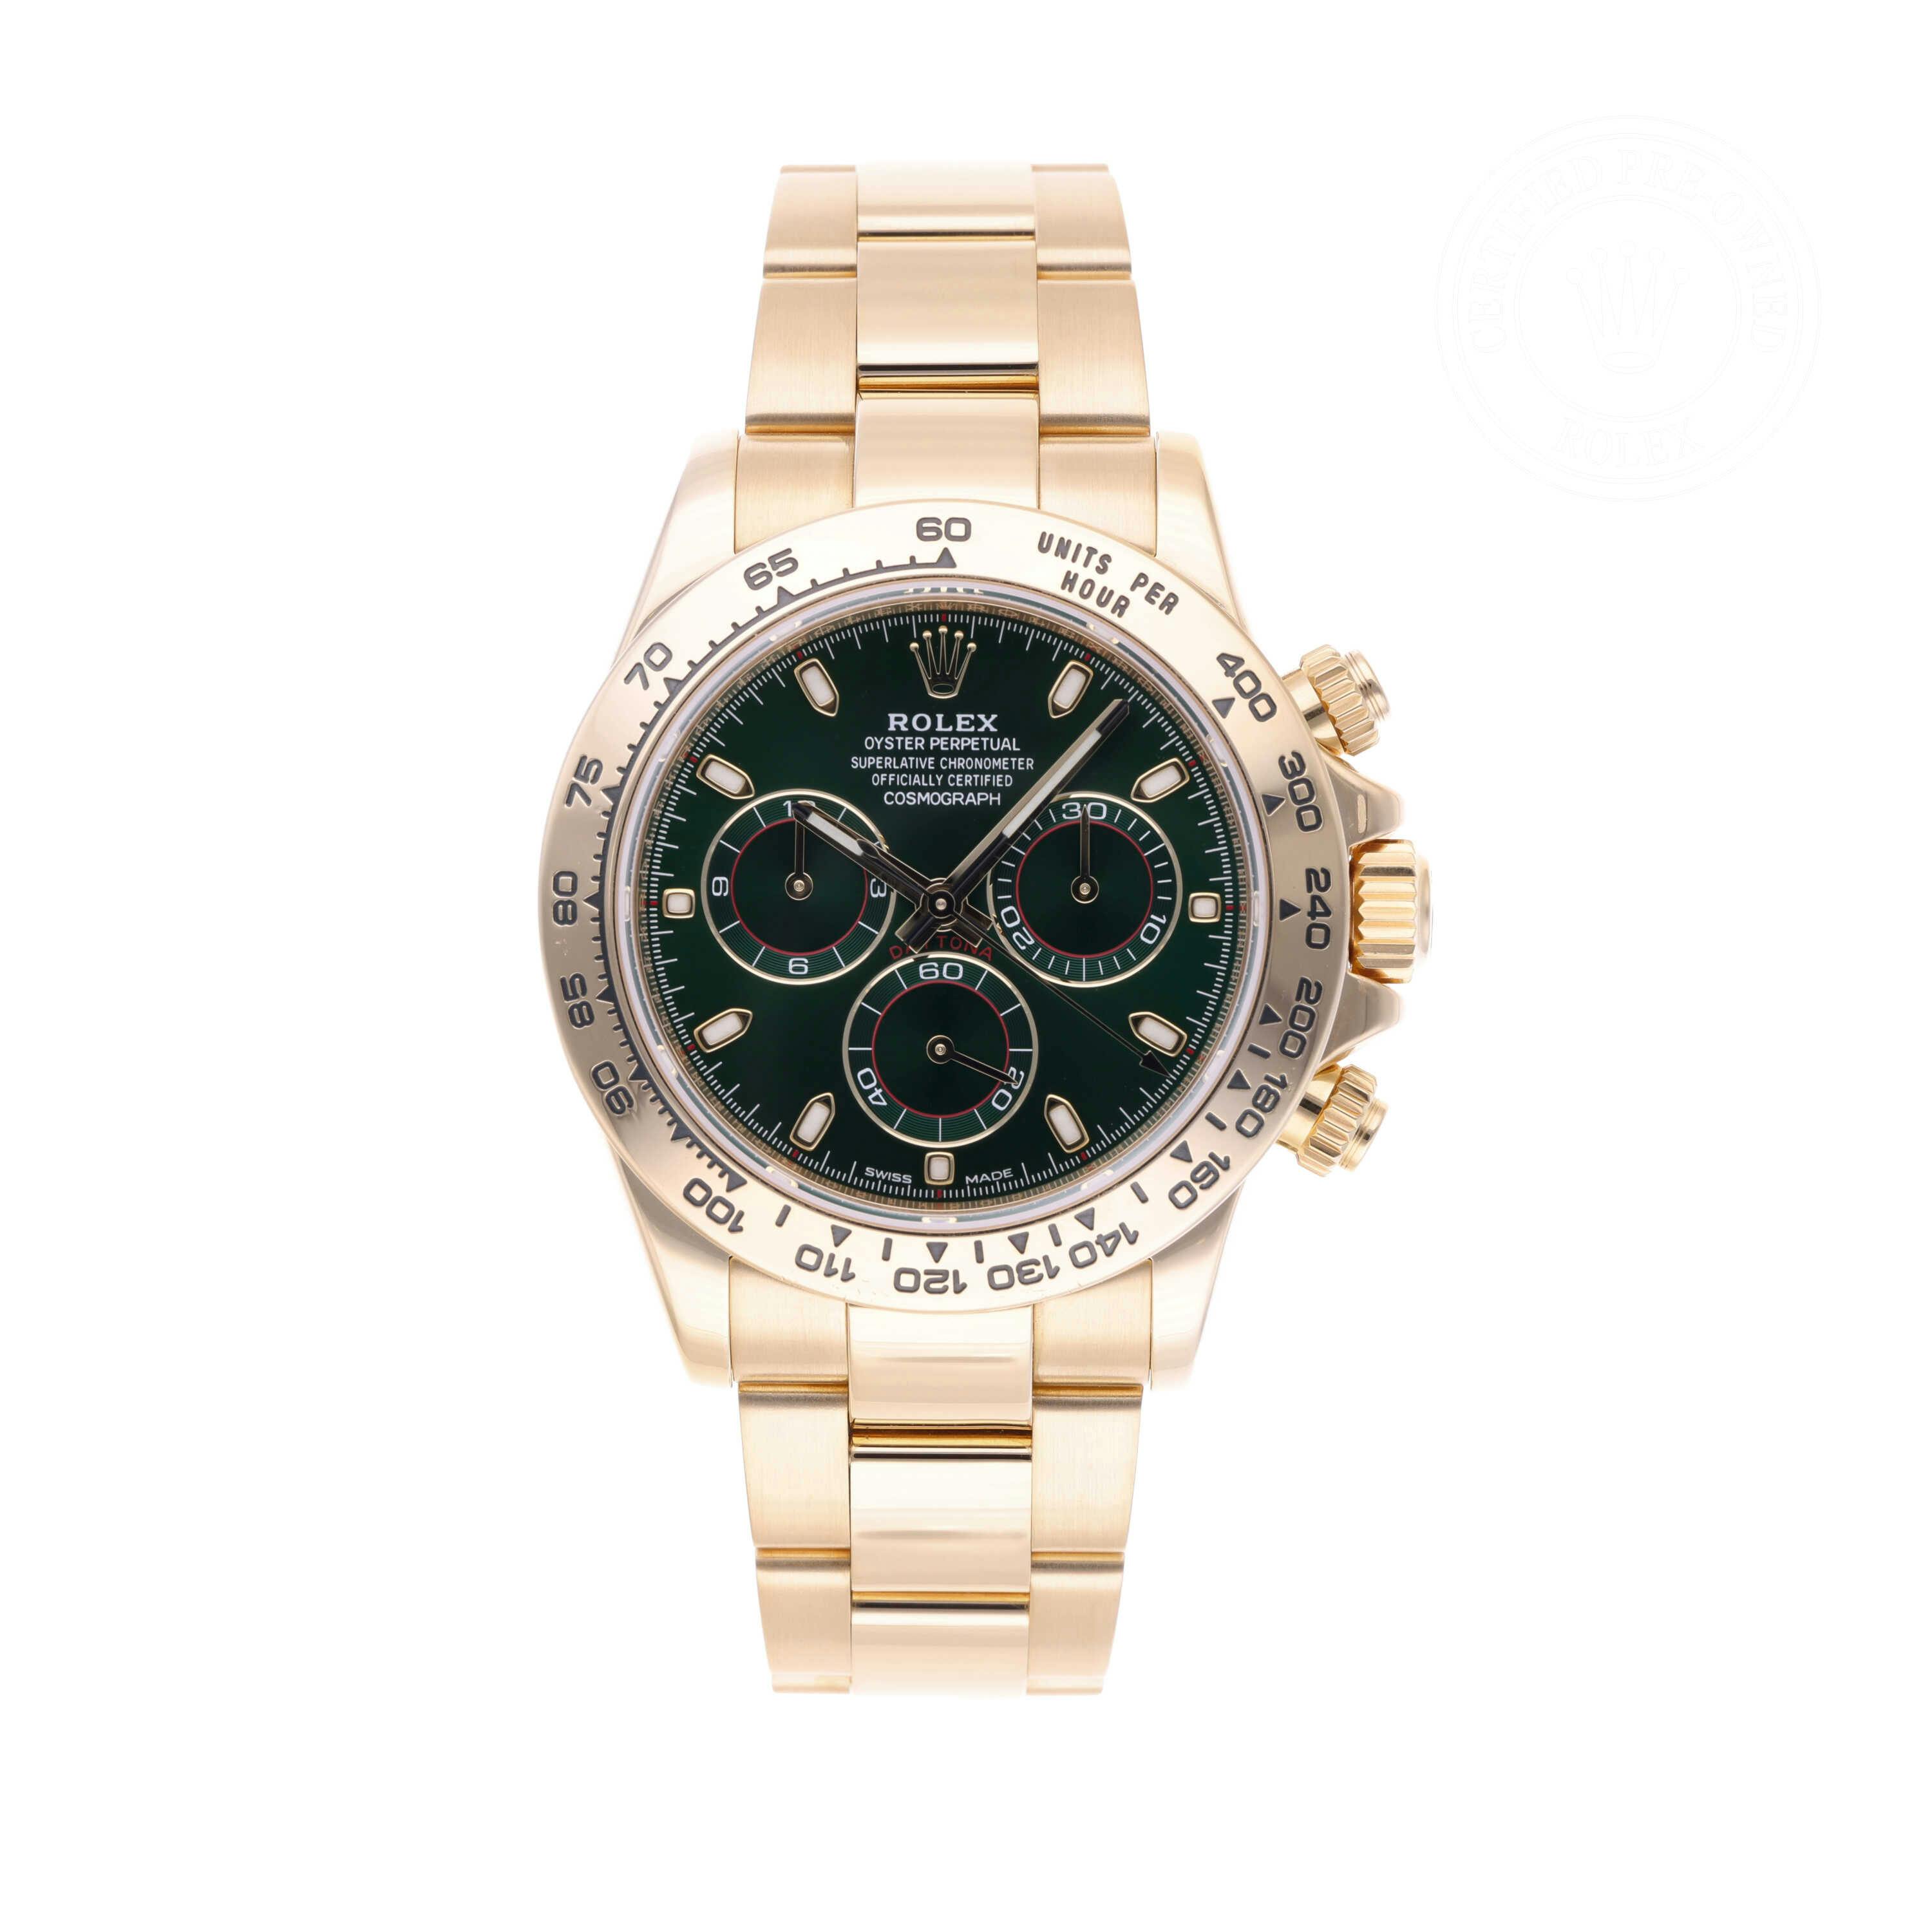 Rolex Daytona | Pre-Owned Daytona Watches for Sale | WatchBox